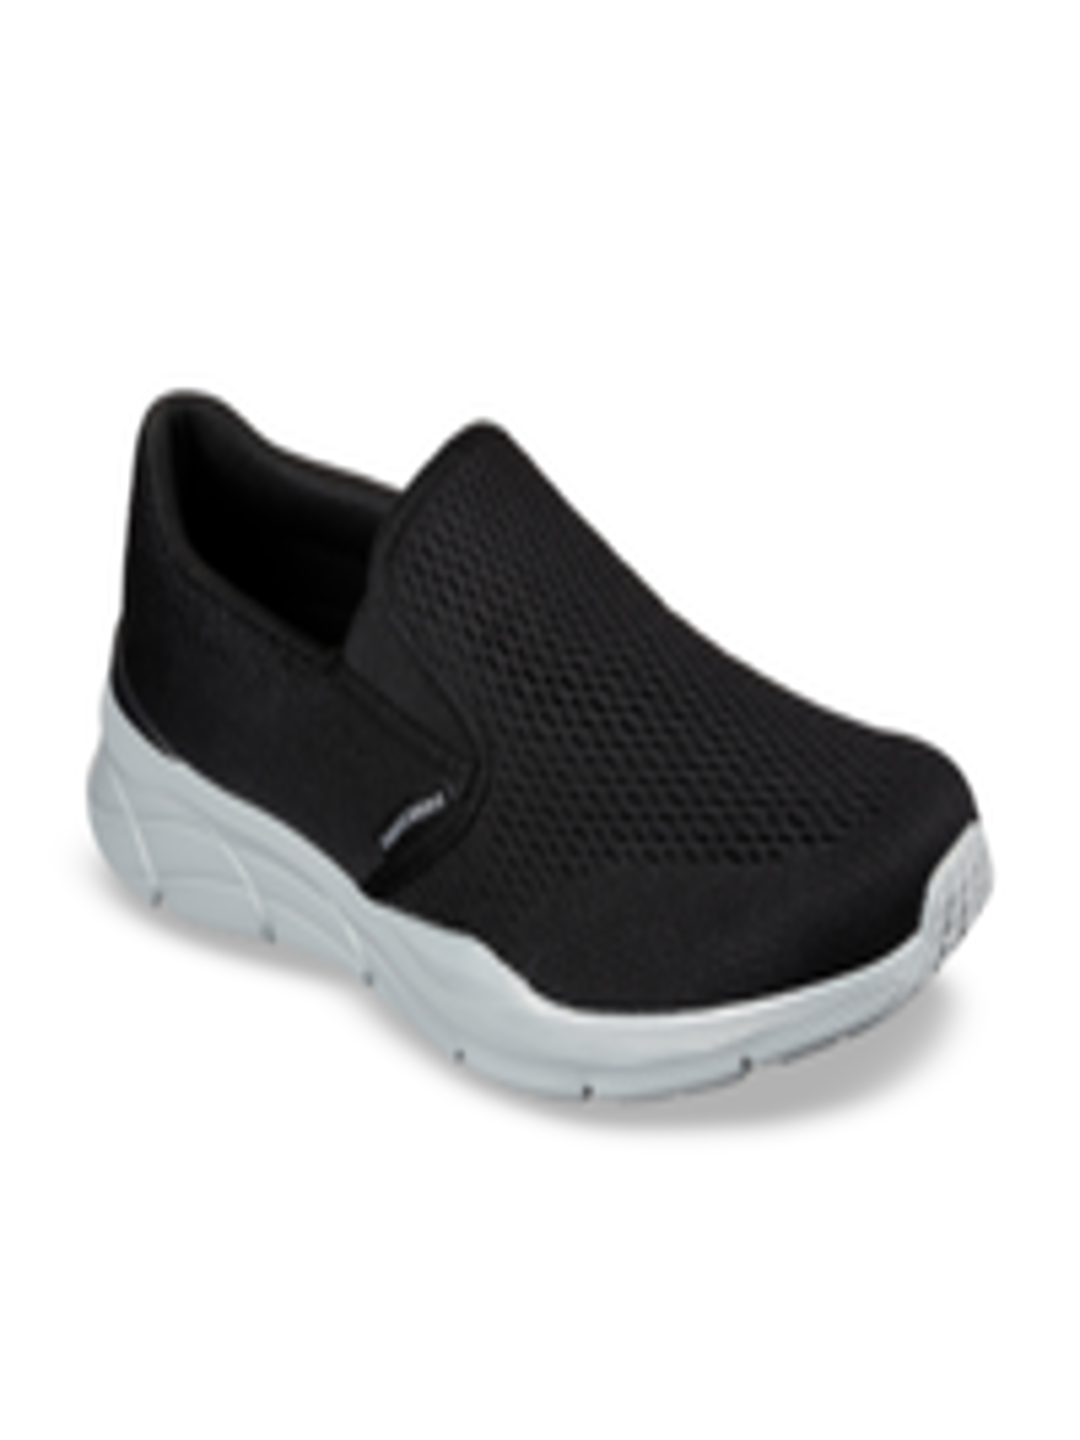 Buy Skechers Men Black Slip On Sneakers - Casual Shoes for Men 18378606 ...